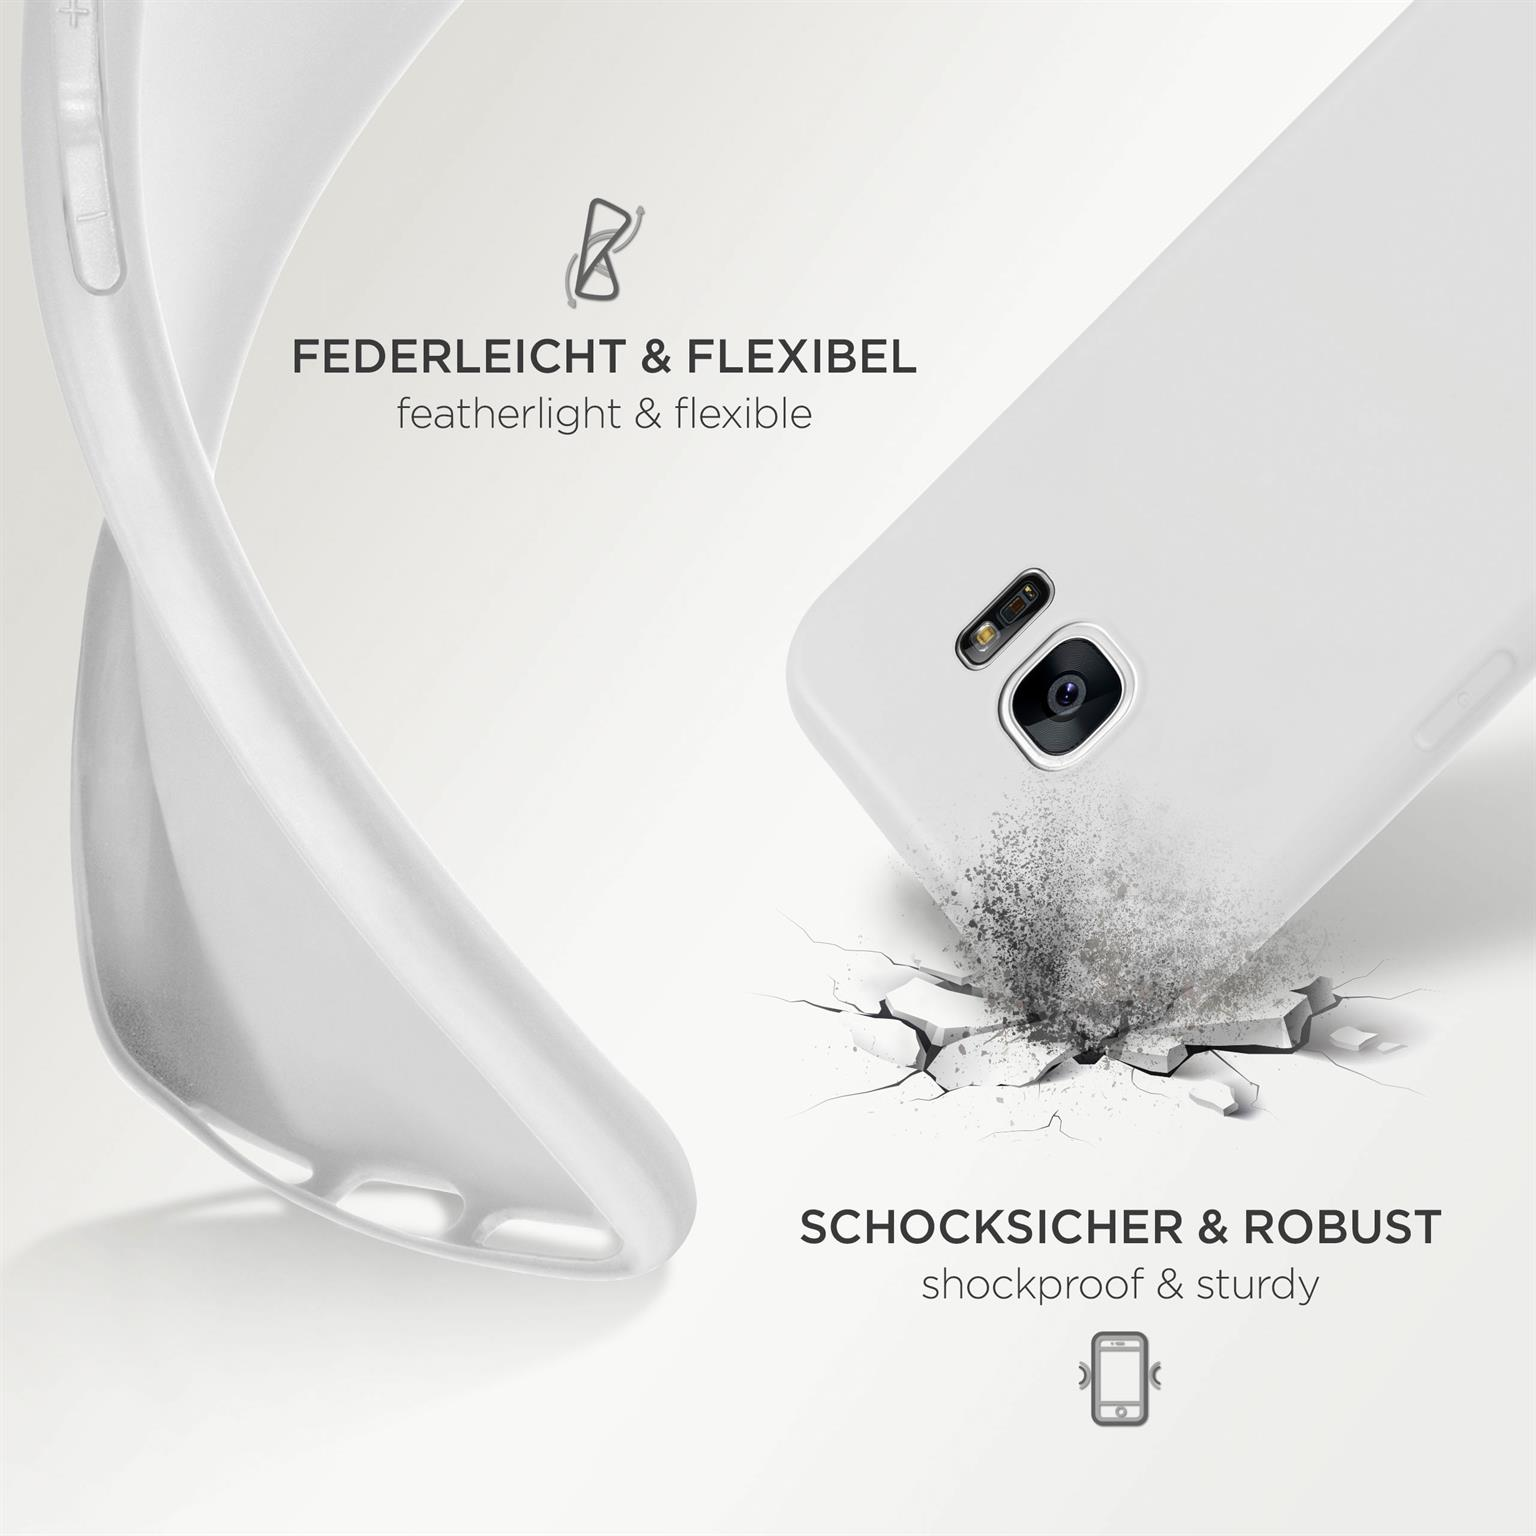 SlimShield Pro Samsung, S7 Backcover, Edge, ONEFLOW Case, Weiß Galaxy